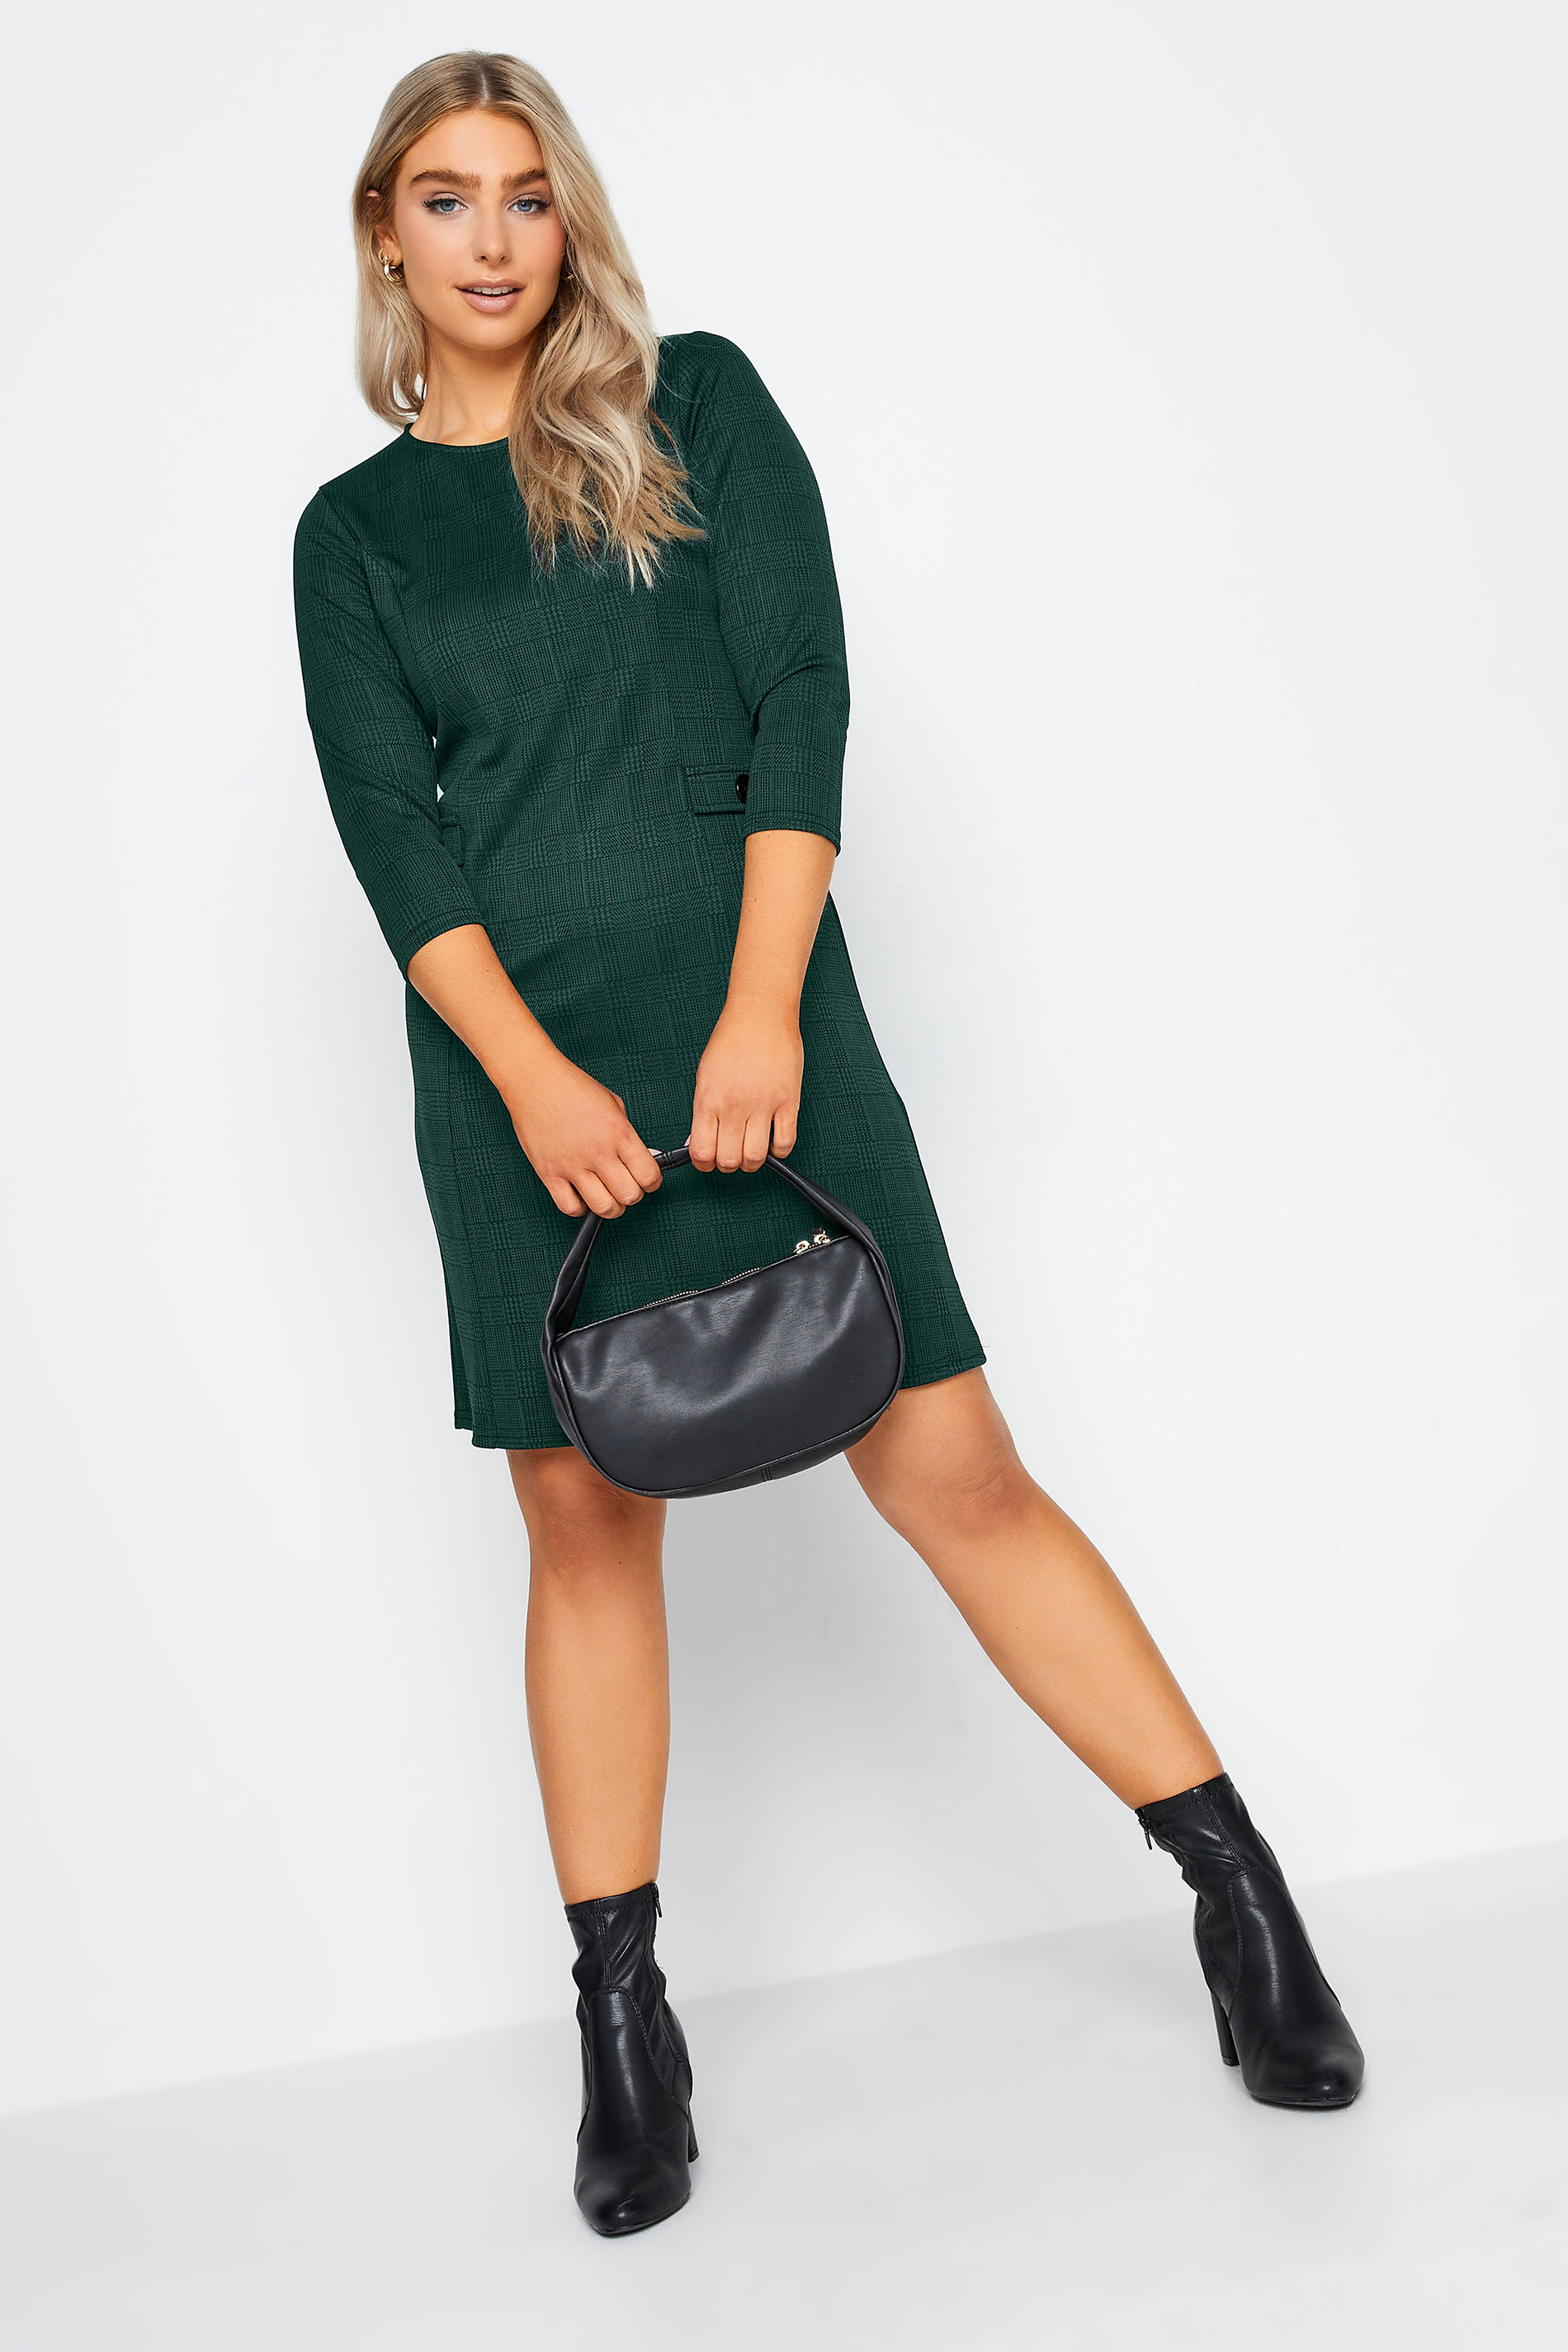 M&Co Petite Teal Green Check Print Shift Dress | M&Co 2